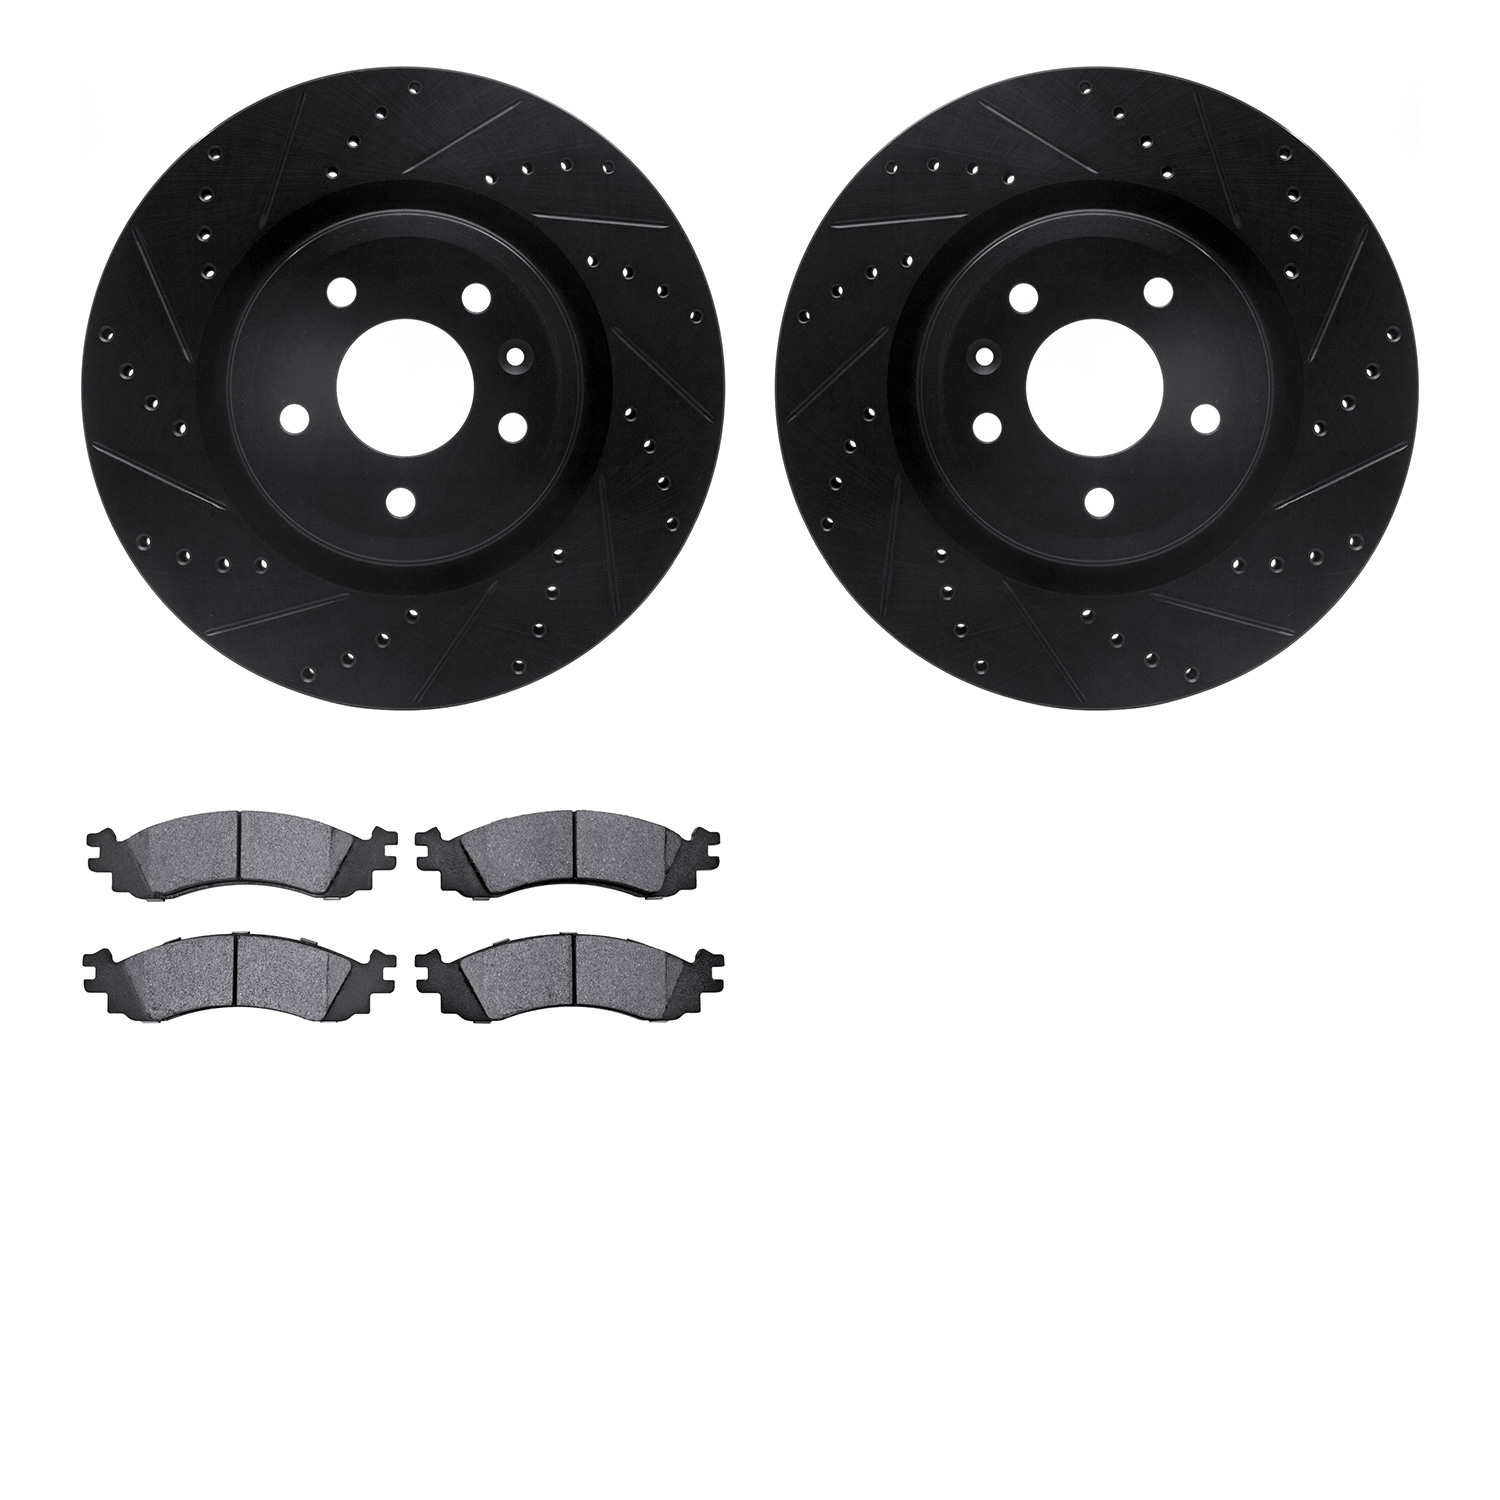 8302-54183 Drilled/Slotted Brake Rotors with 3000-Series Ceramic Brake Pads Kit [Black], 2011-2012 Ford/Lincoln/Mercury/Mazda, P